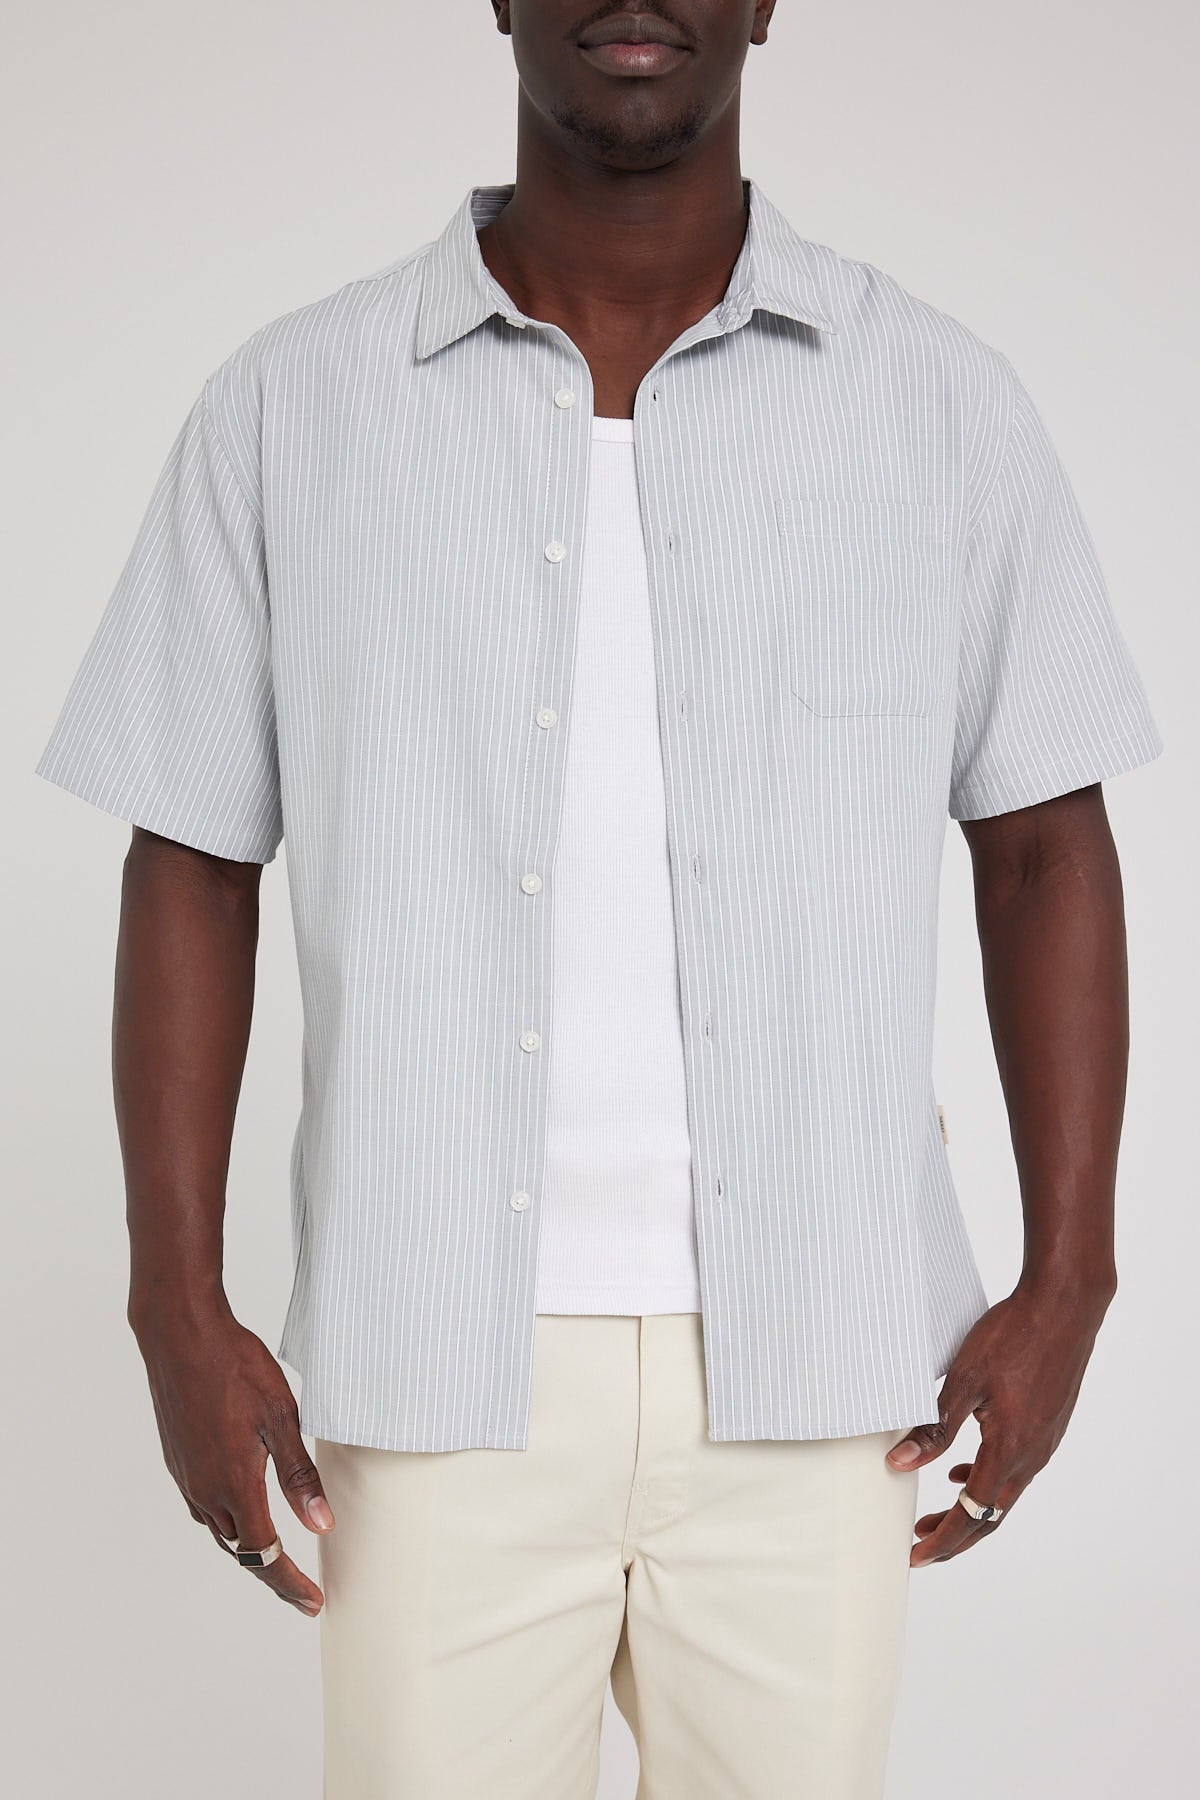 Common Need Realism Short Sleeve Shirt Seafoam Stripe – Universal Store